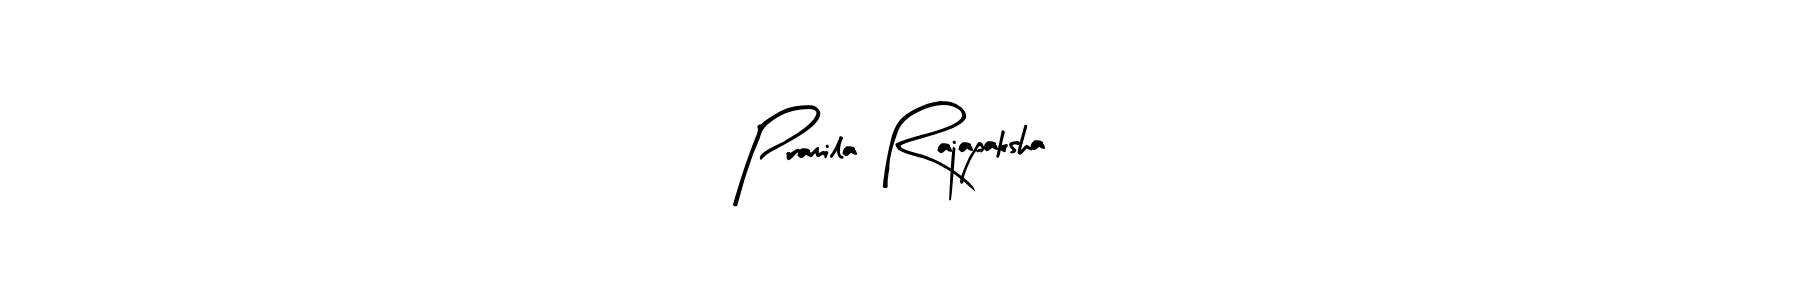 Make a beautiful signature design for name Pramila Rajapaksha. Use this online signature maker to create a handwritten signature for free. Pramila Rajapaksha signature style 8 images and pictures png